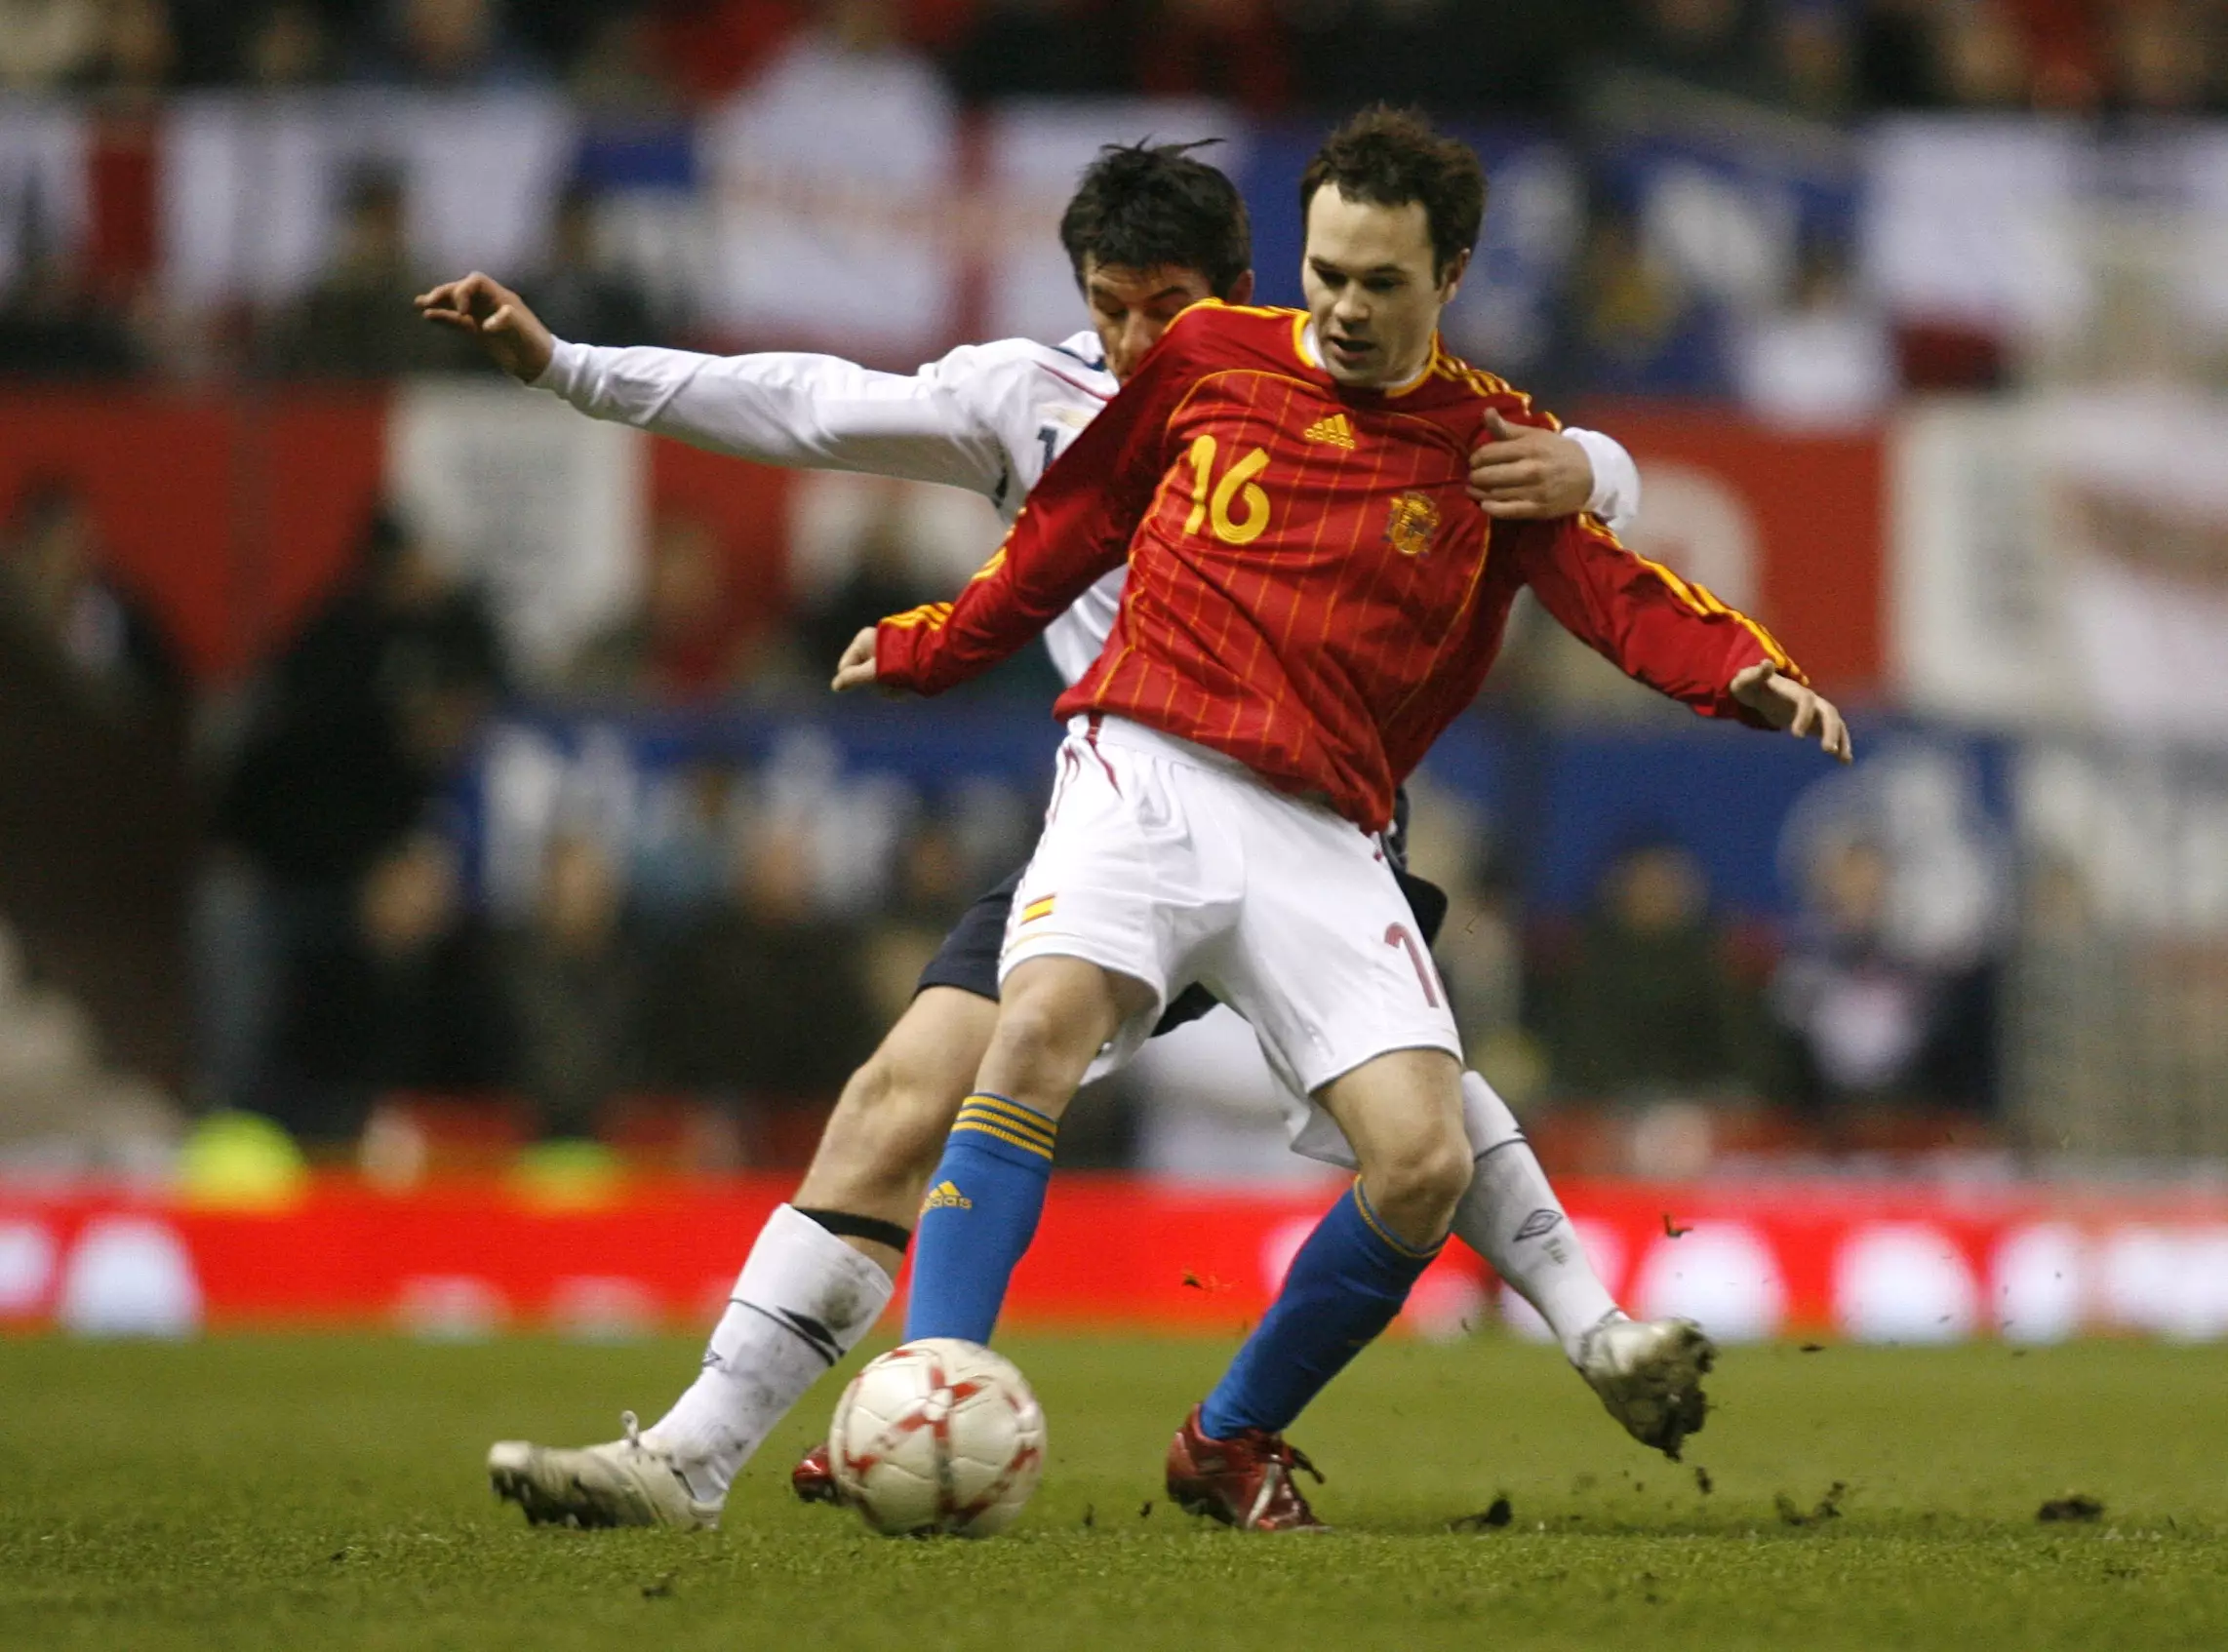 Barton vs Iniesta actually happened. Image: PA Images